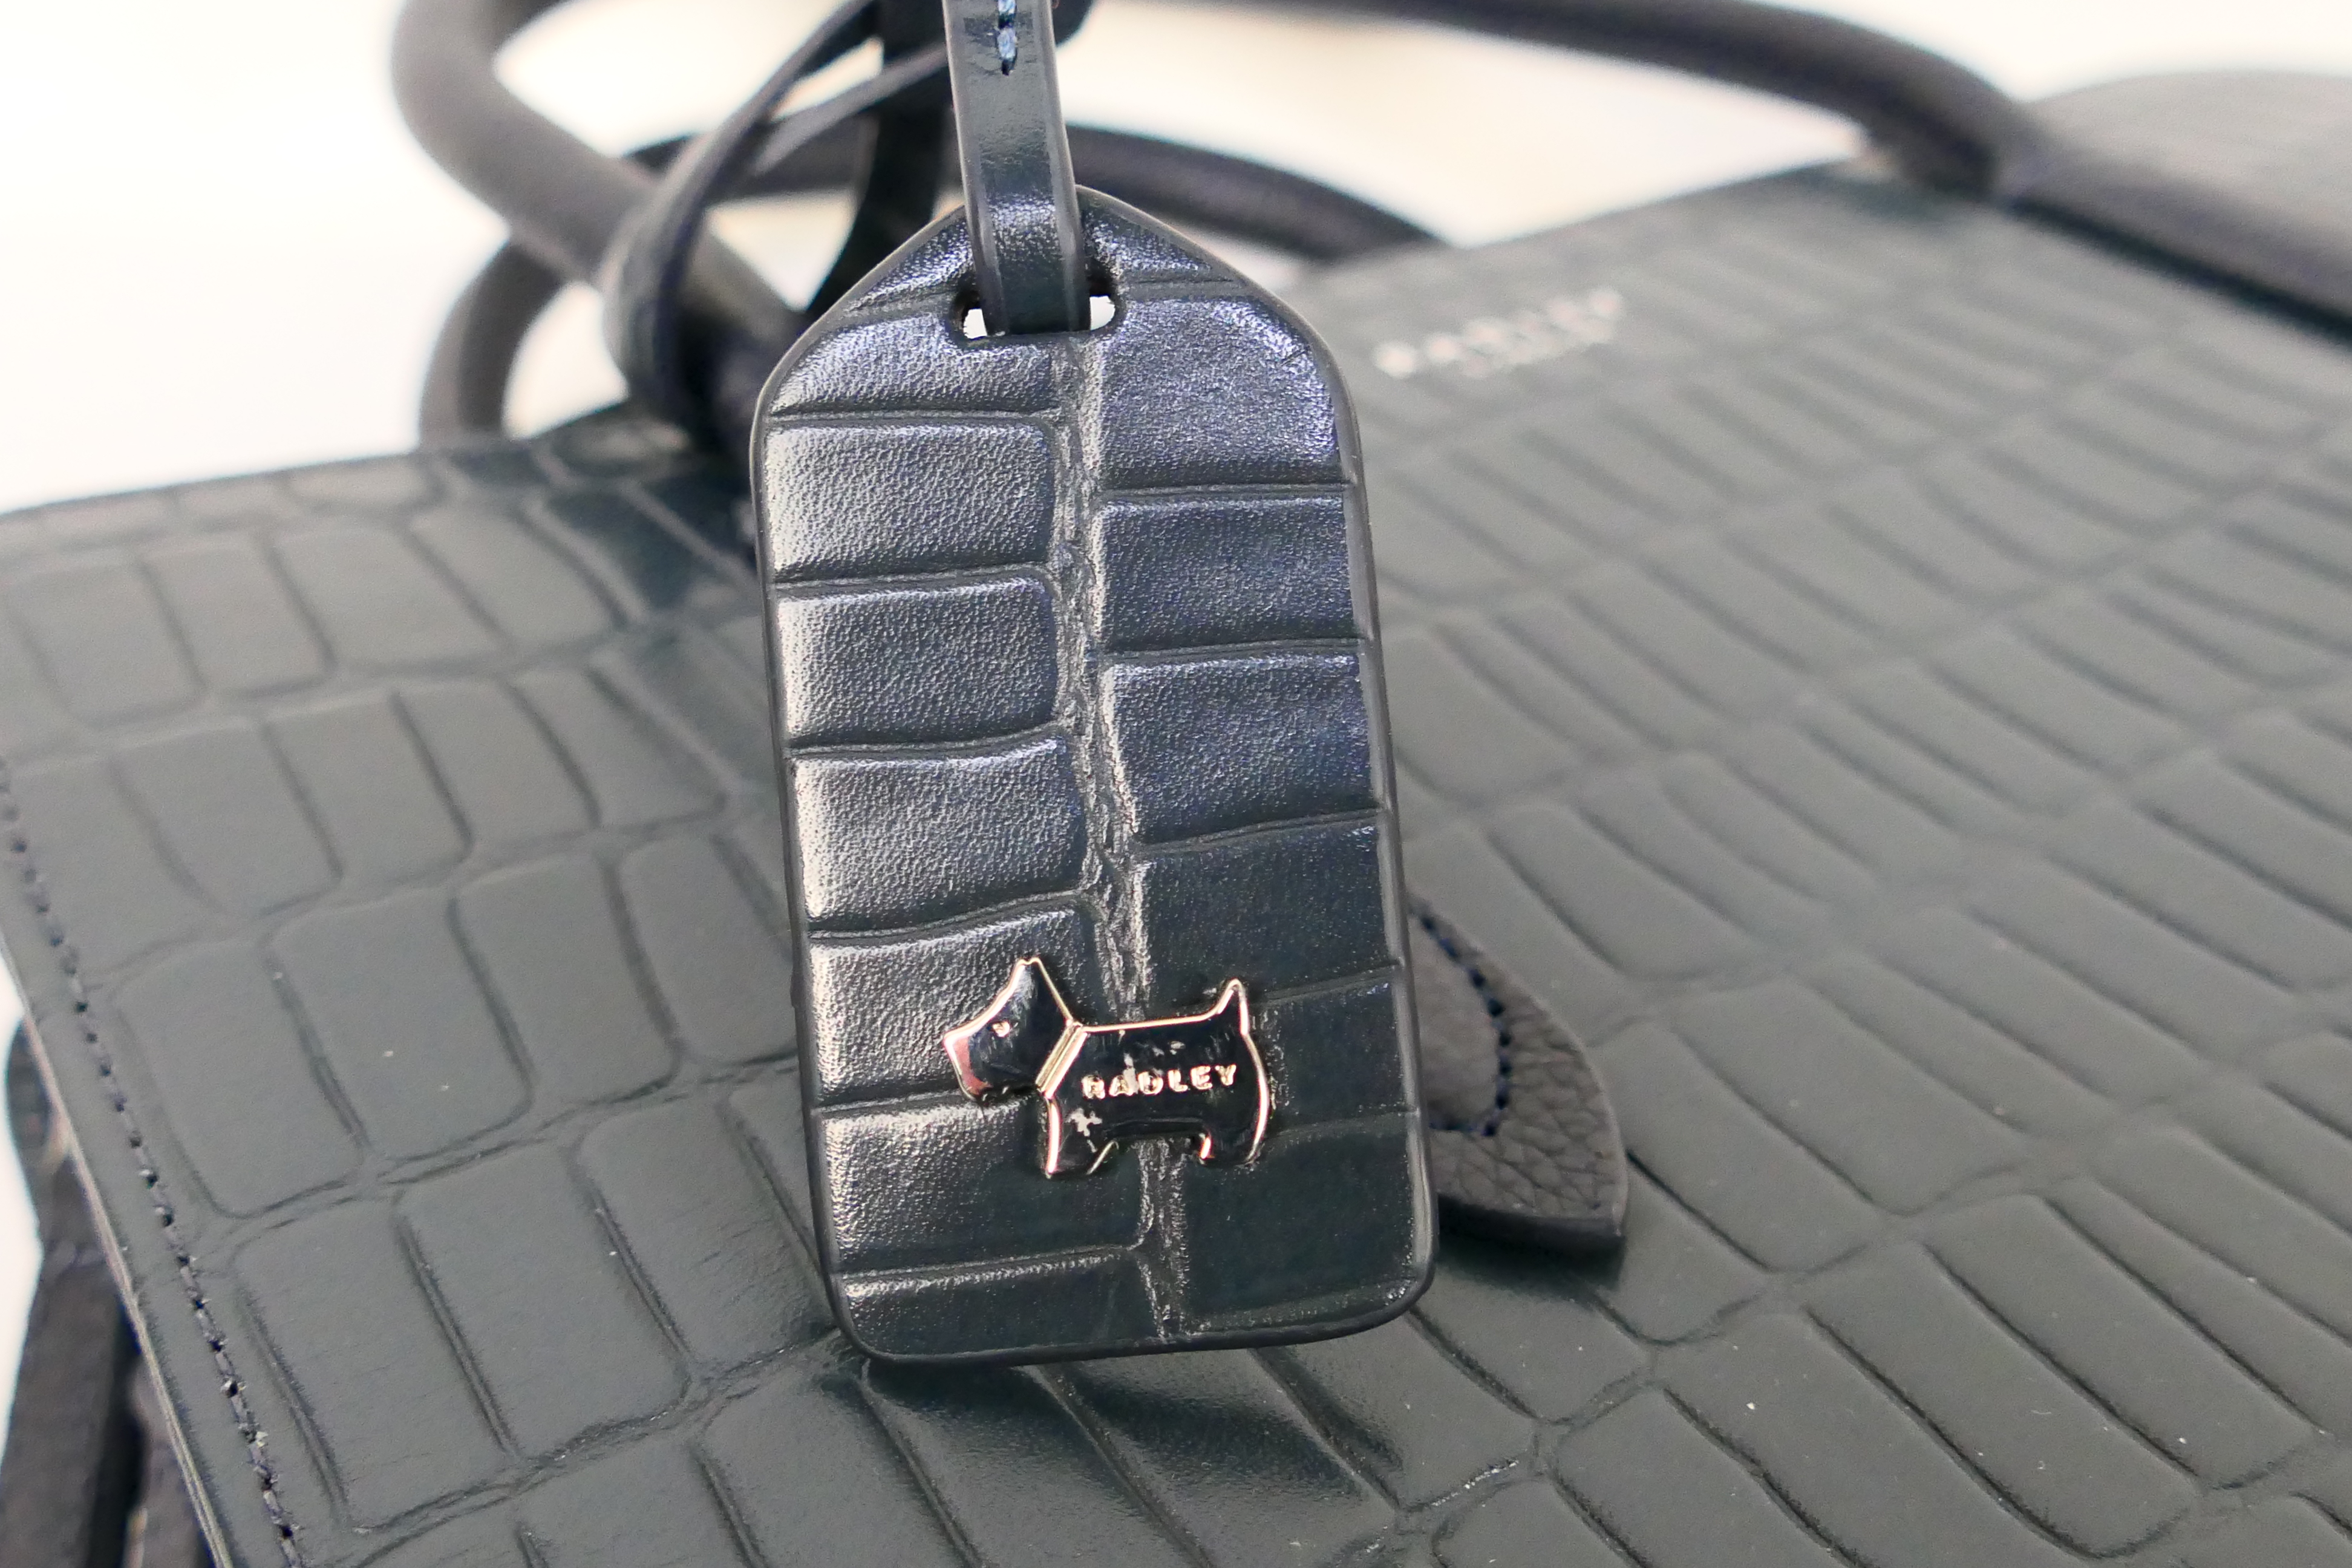 Radley - A dark blue Radley London leather handbag with shoulder strap - Handbag has one inner zip - Image 6 of 9